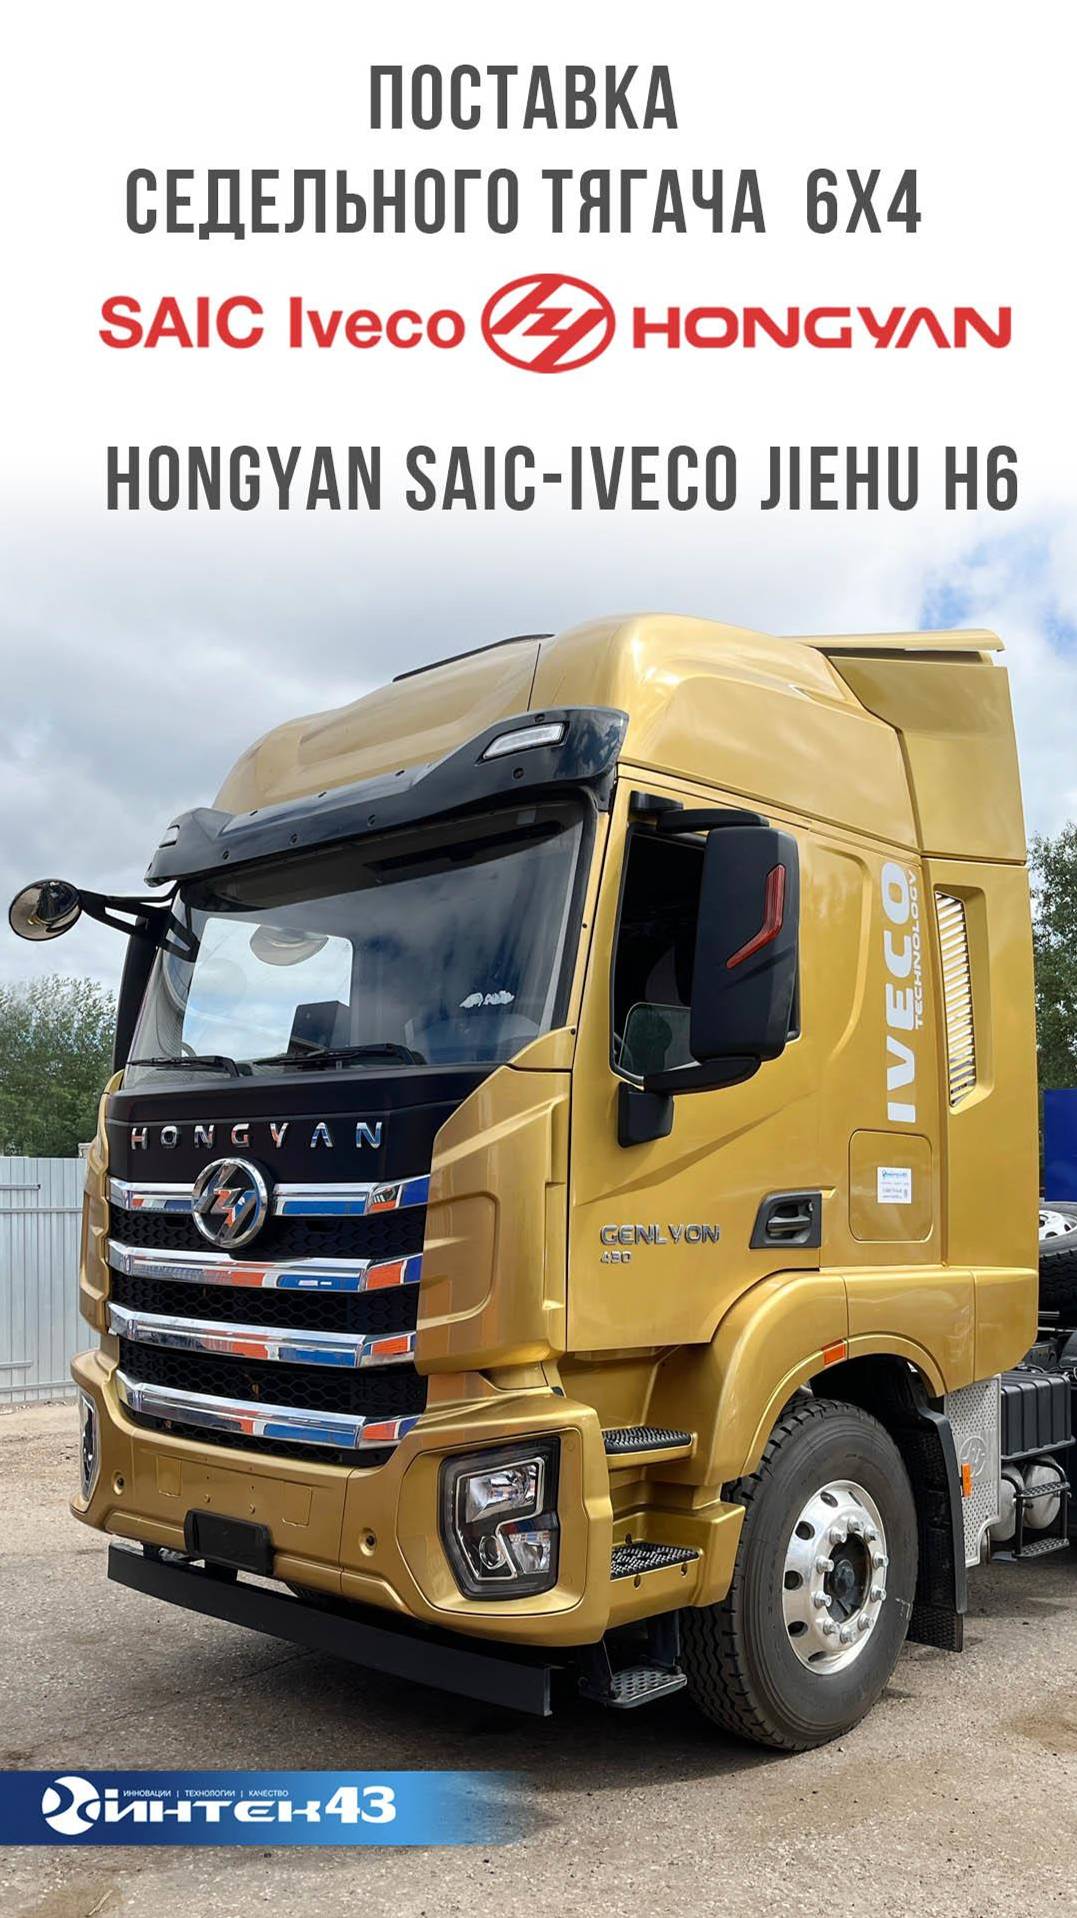 Поставка седельного тягача 6х4 HONGYAN SAIC-IVECO JIEHU H6 -CQ4257ЕV11334. Интек 43 - дилер Hongyan